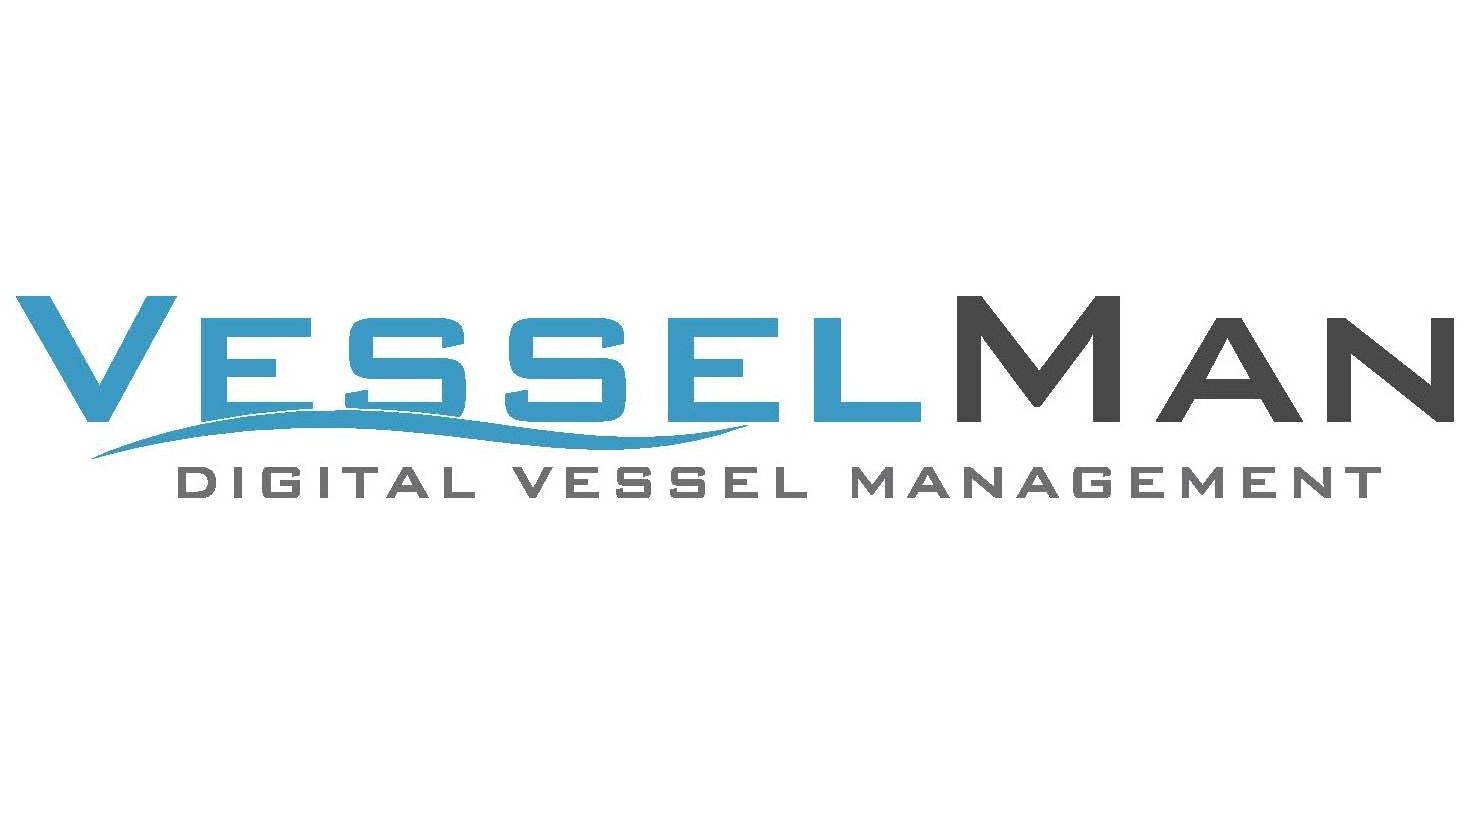 vesselman logo